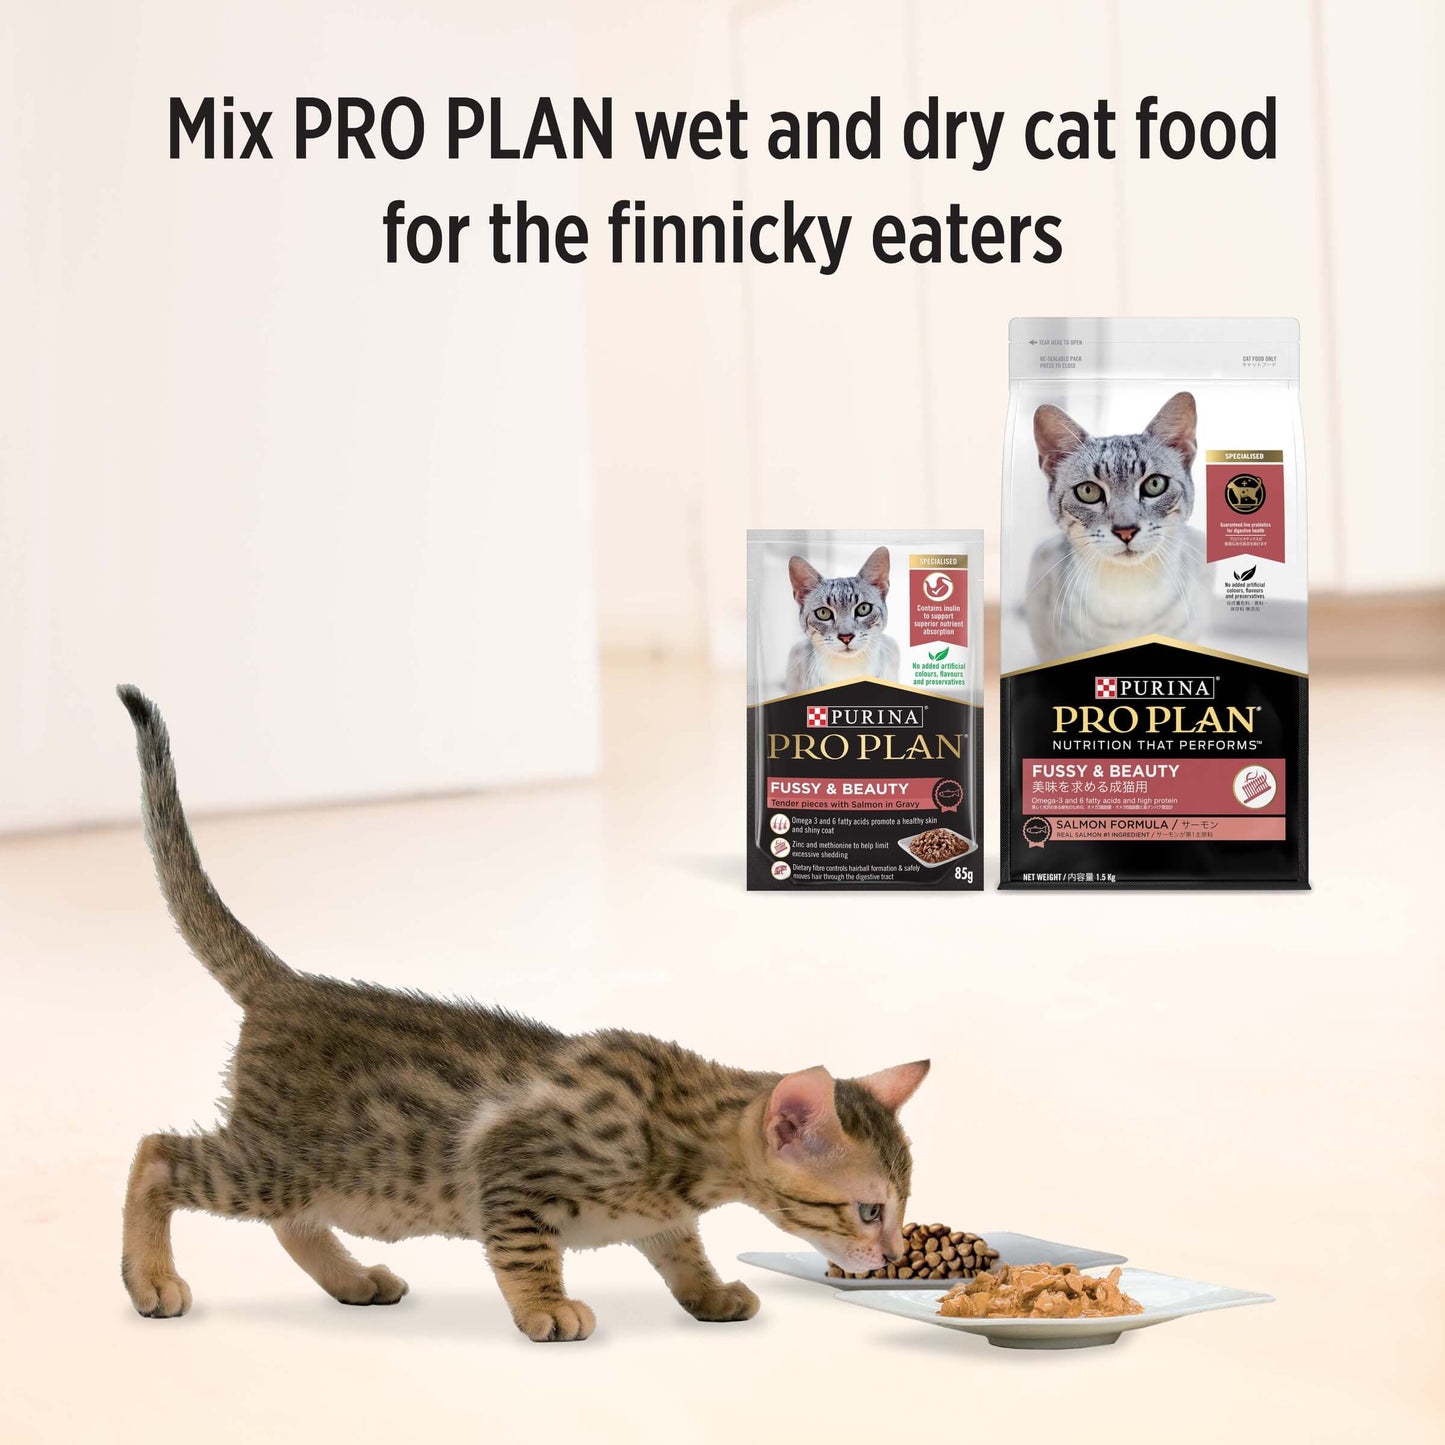 Pro Plan Adult Fussy & Beauty Salmon Pouch Wet Cat Food 85g